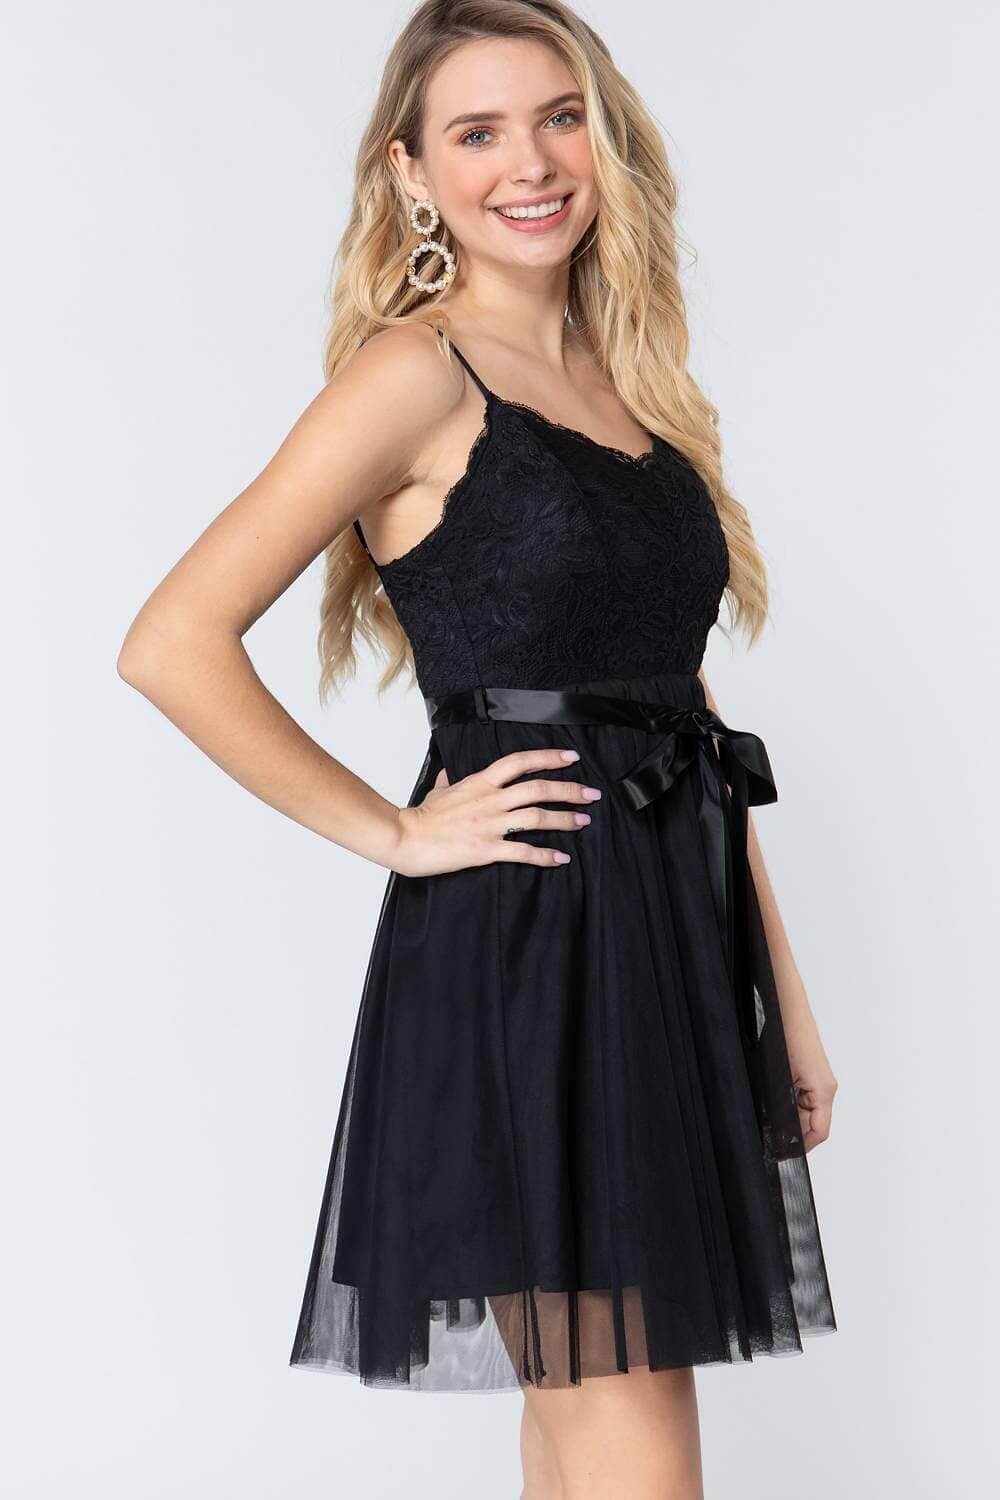 Black Lace Mini Dress - Shopping Therapy, LLC Dress